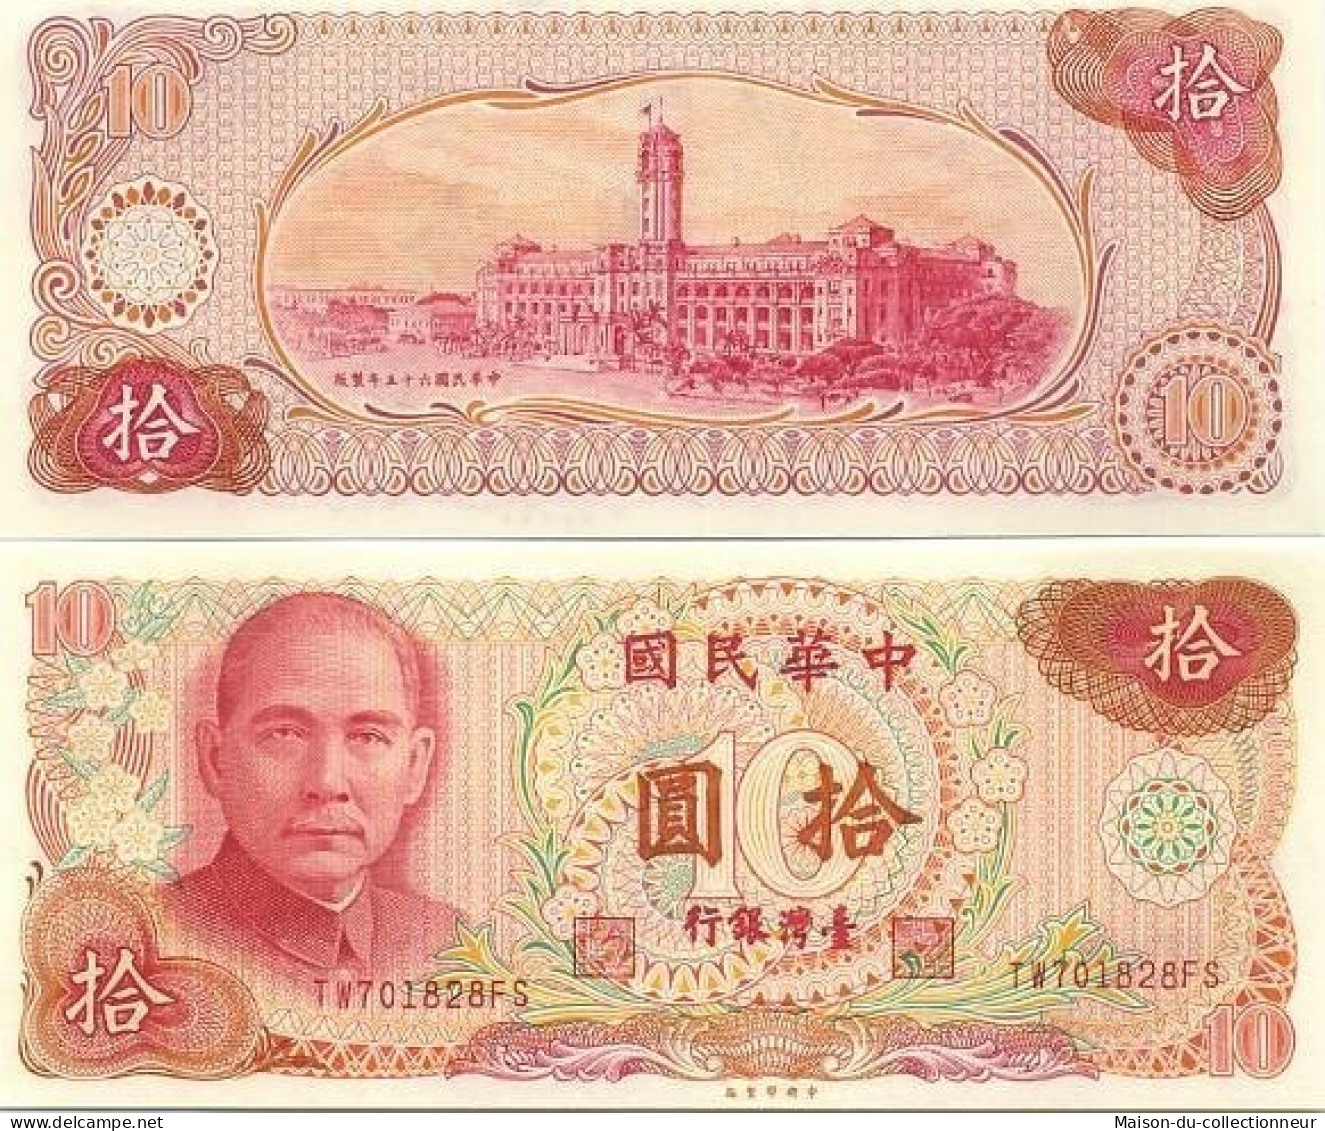 Billets Banque Taiwan Pk N° 1984 - 100 YUAN - Taiwan